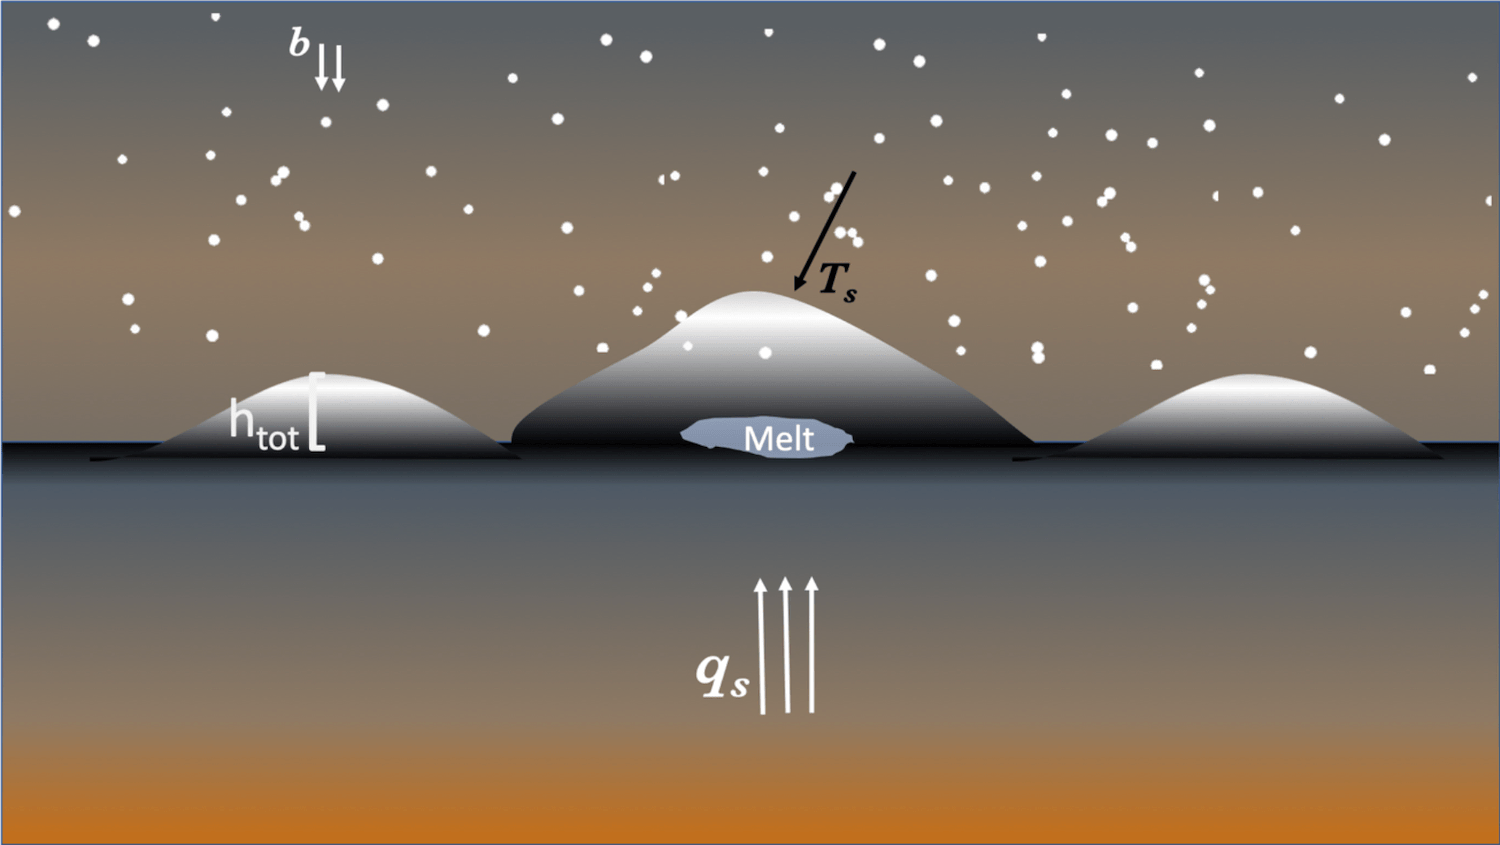 Mars ice model schematic.